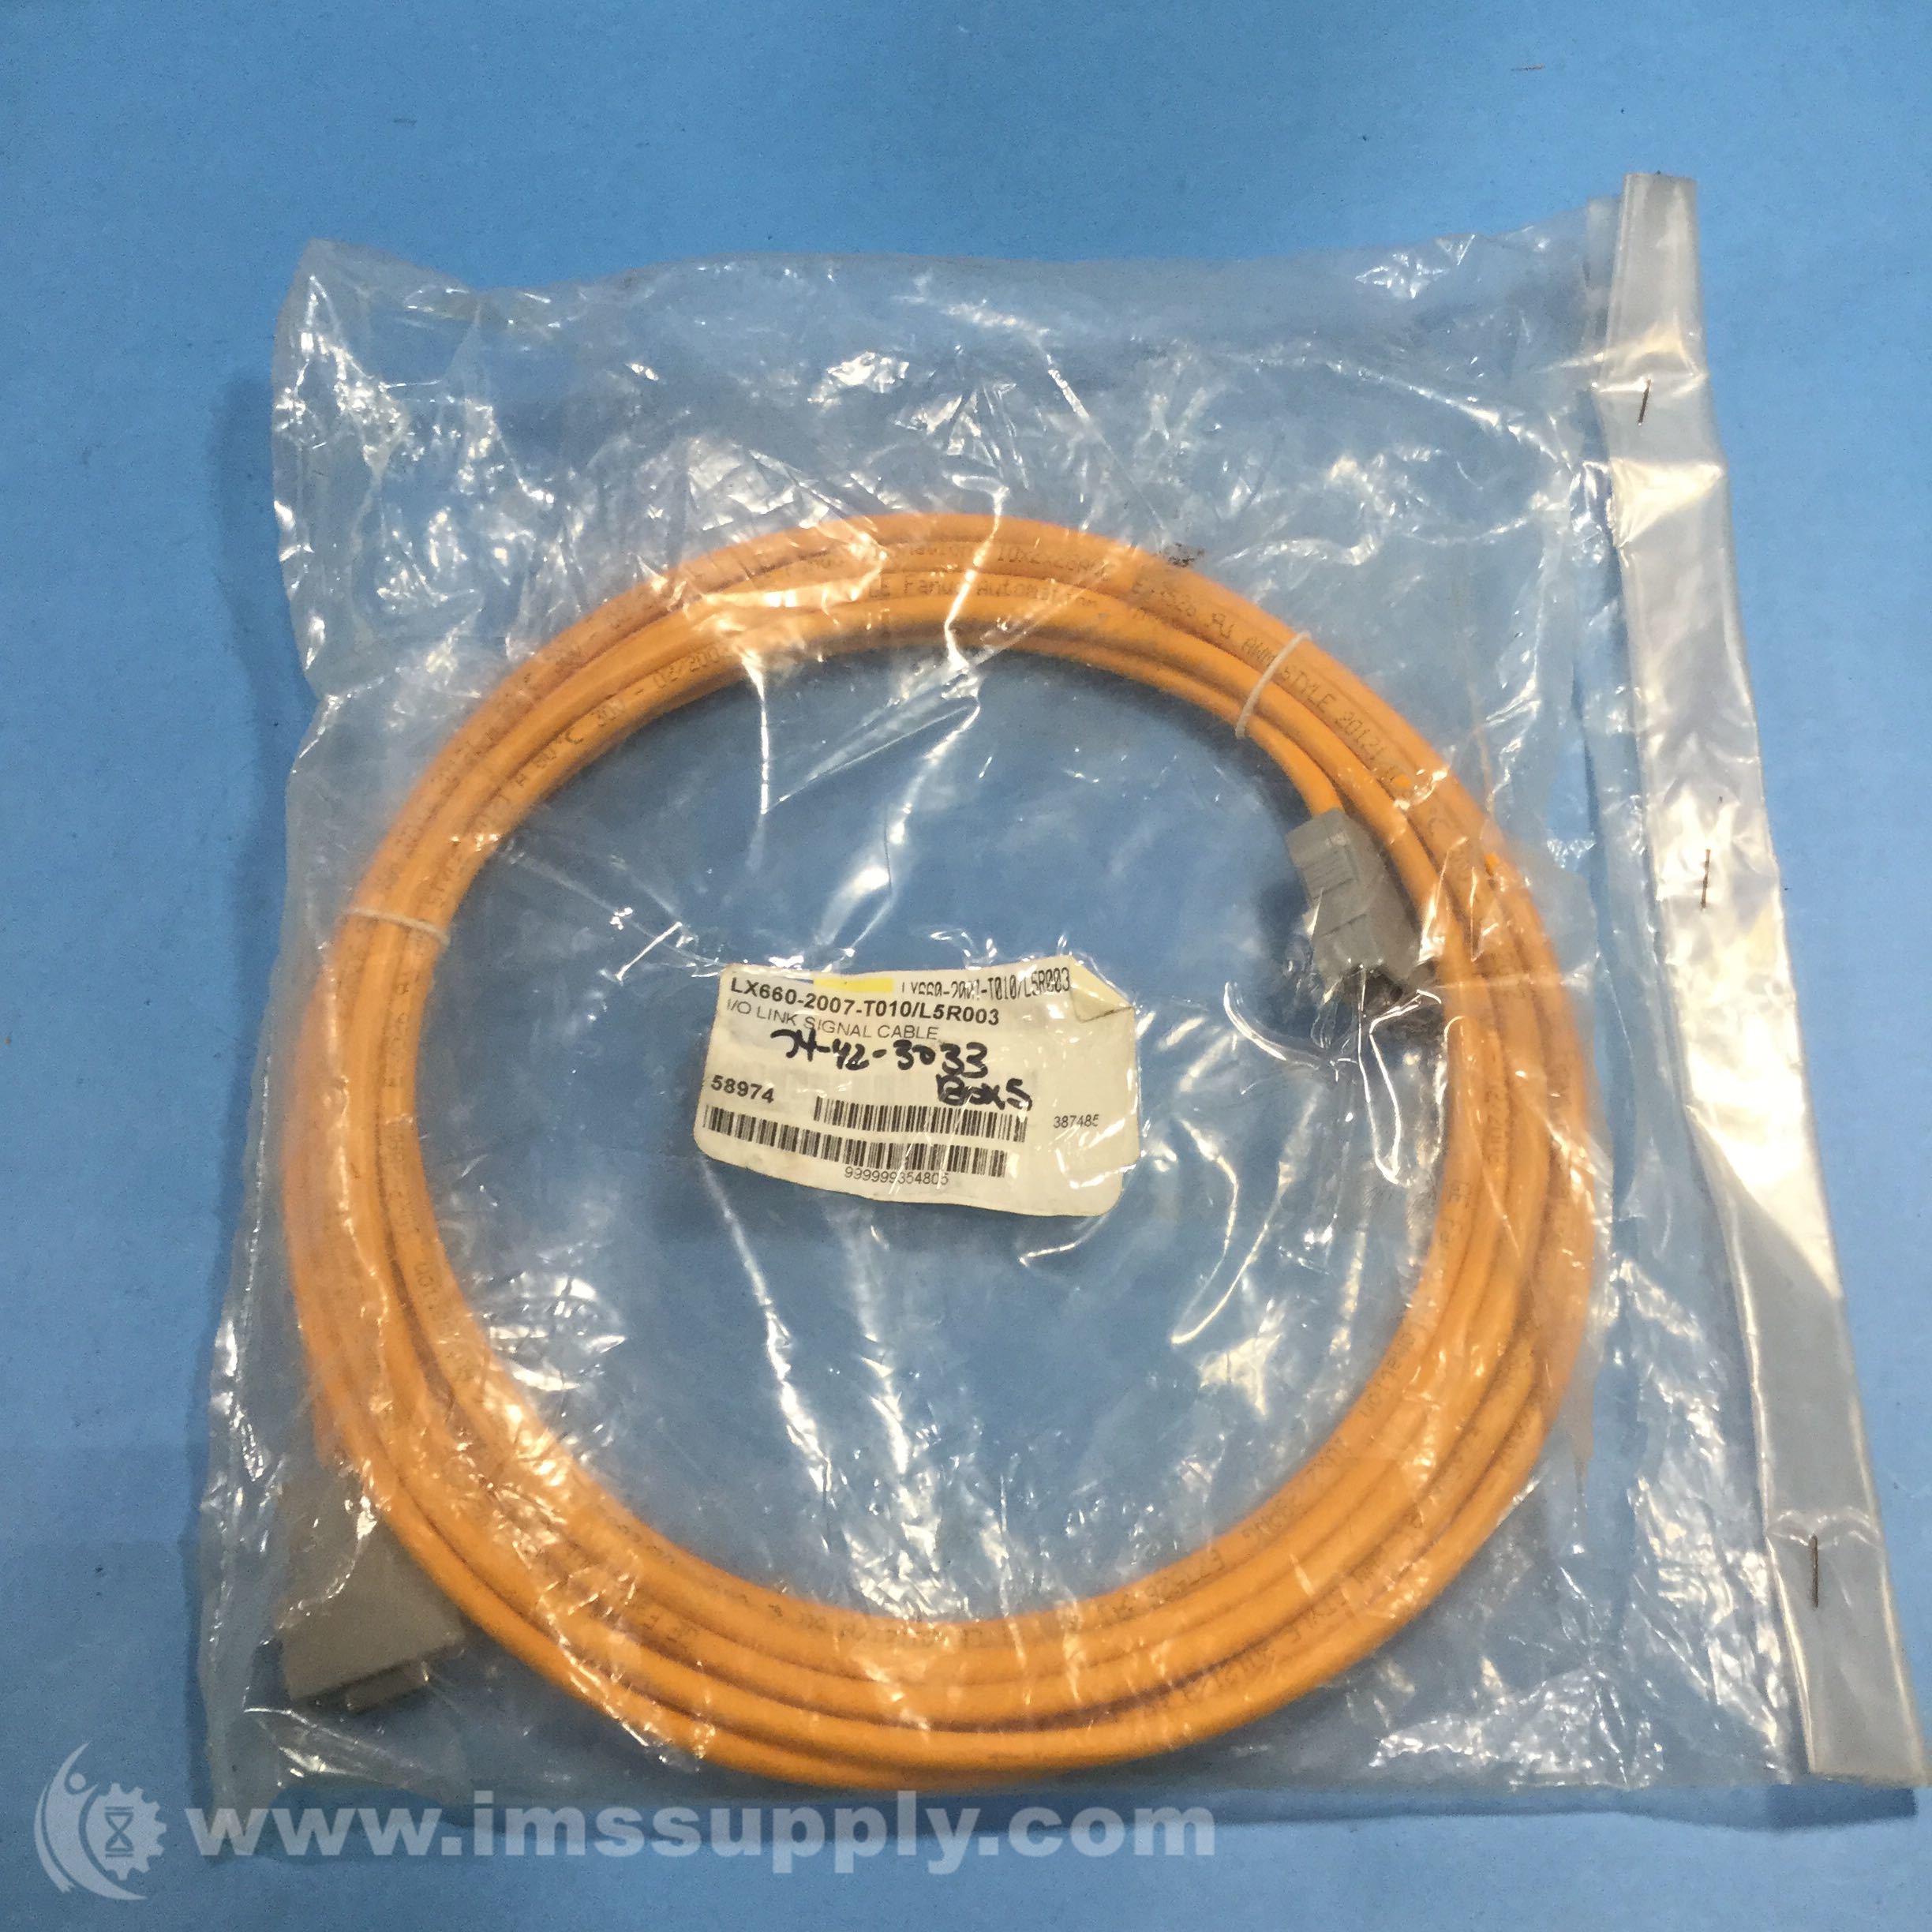 Fanuc lx660-8077-t267/l5r003 AO servo power cable 